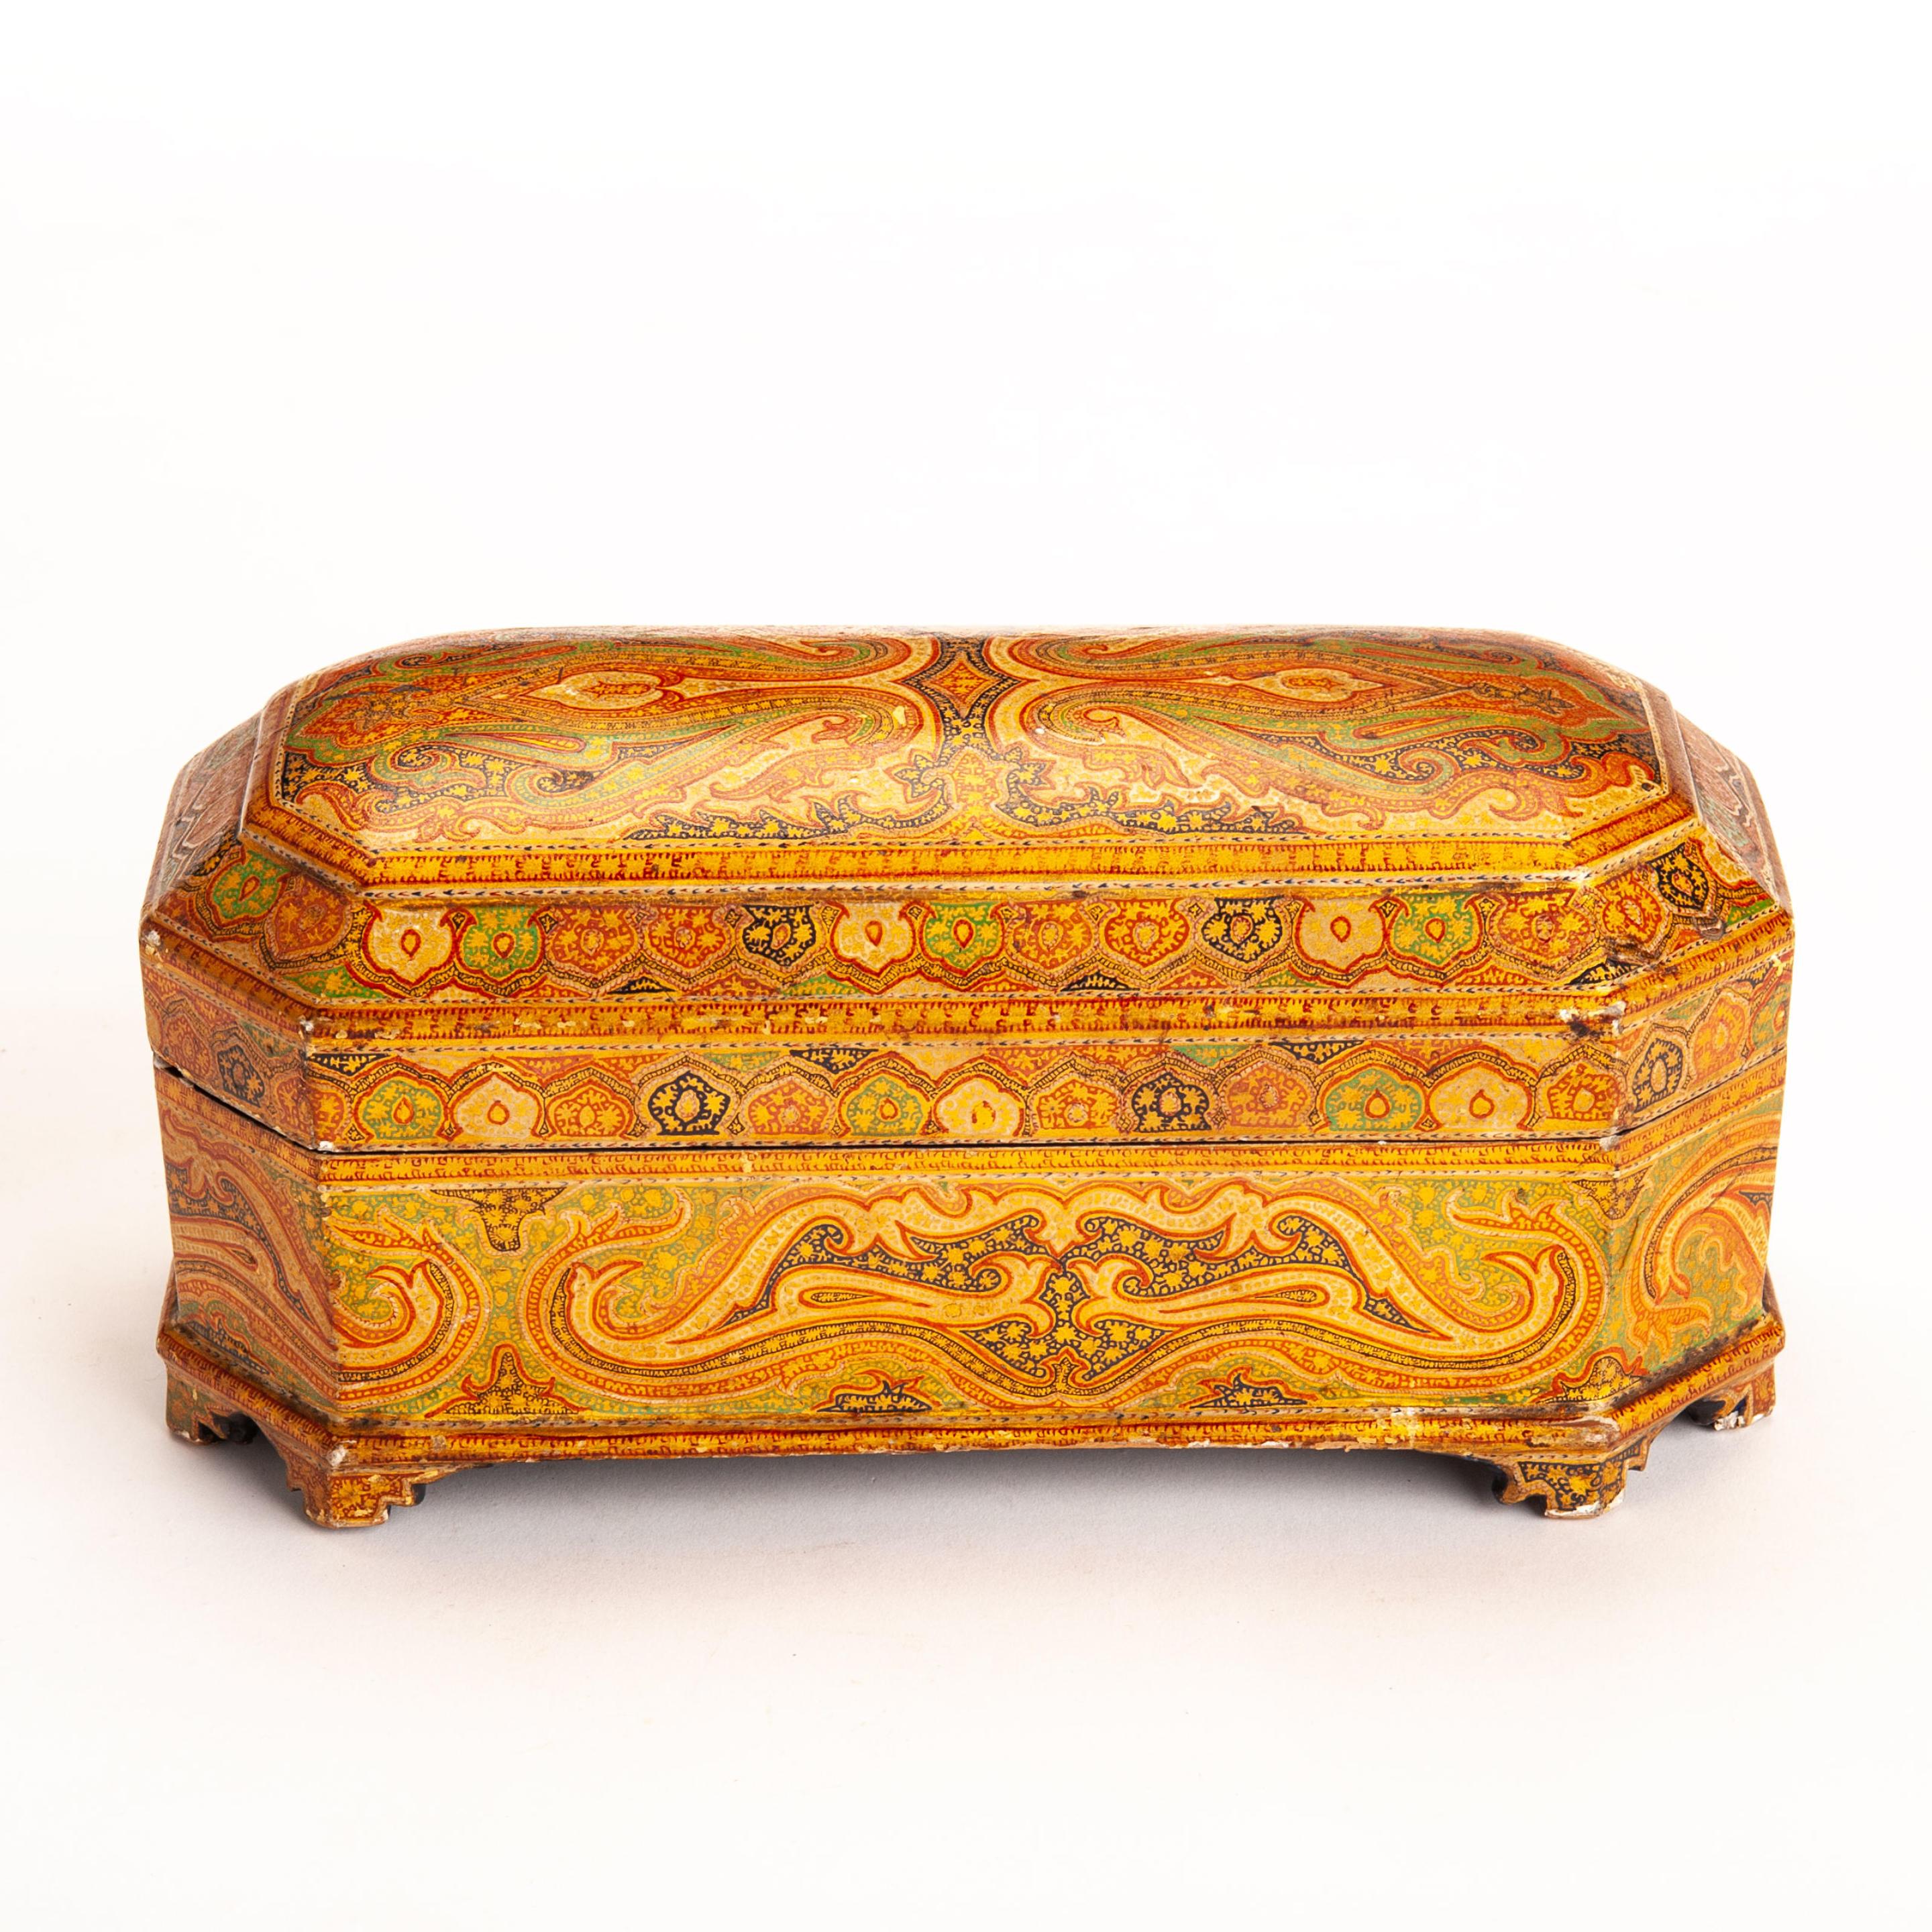 Ref: 125482
Kashmiri lacquer box.
Papier Mache with hand painting and gilt detailing.
India circa 1900

Measurements: H: 10cm (3.9